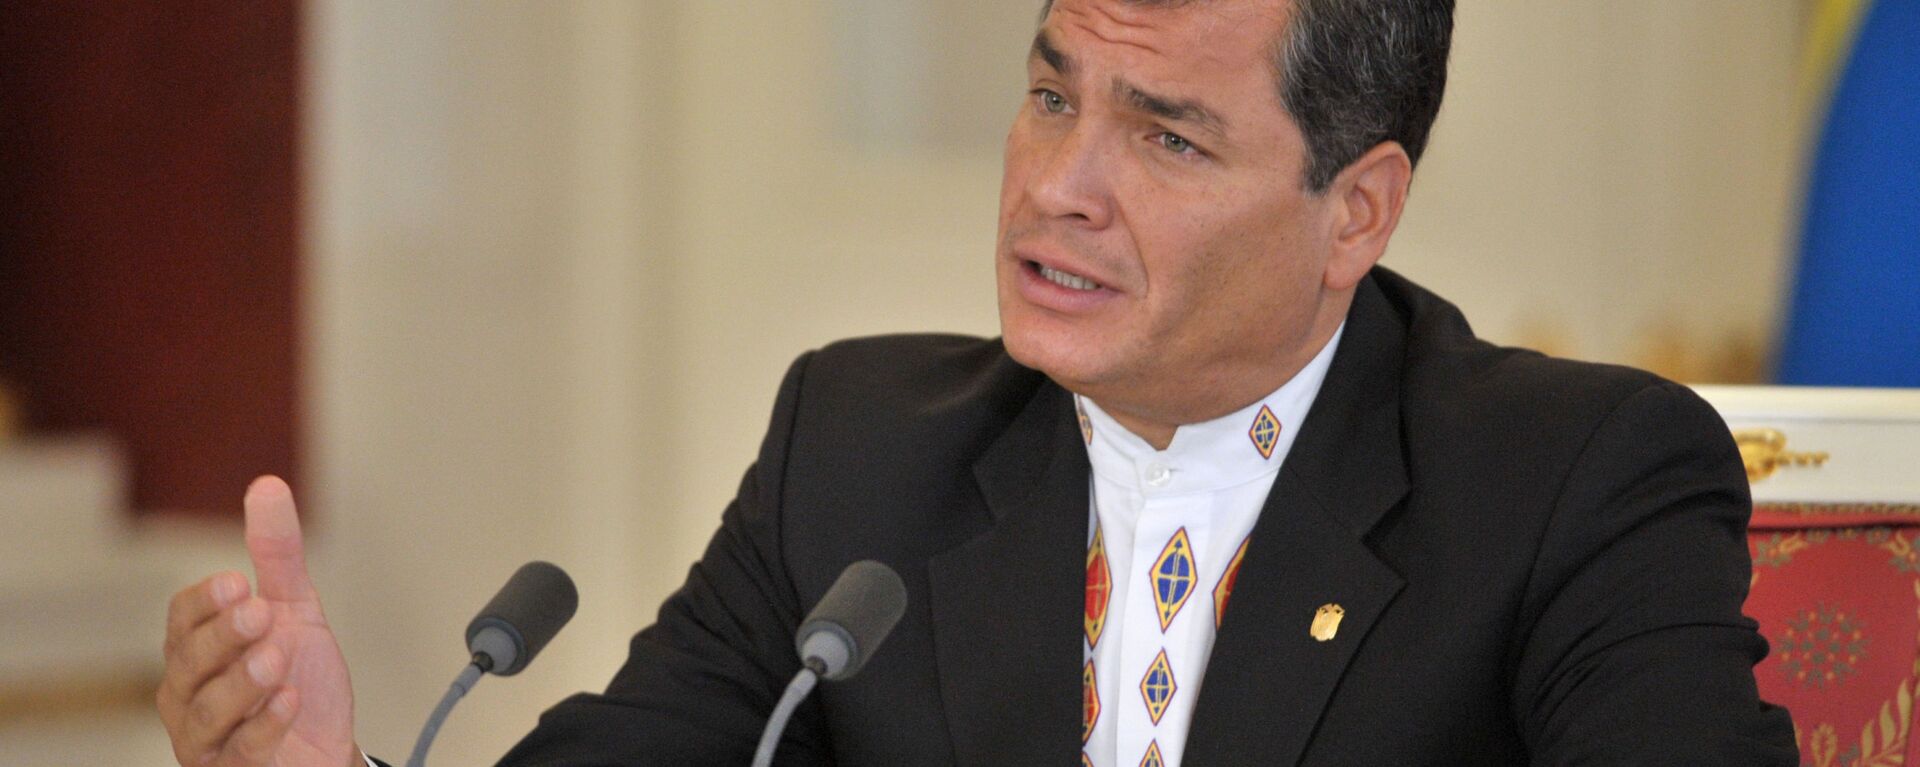 Rafael Correa, expresidente de Ecuador - Sputnik Mundo, 1920, 07.05.2021